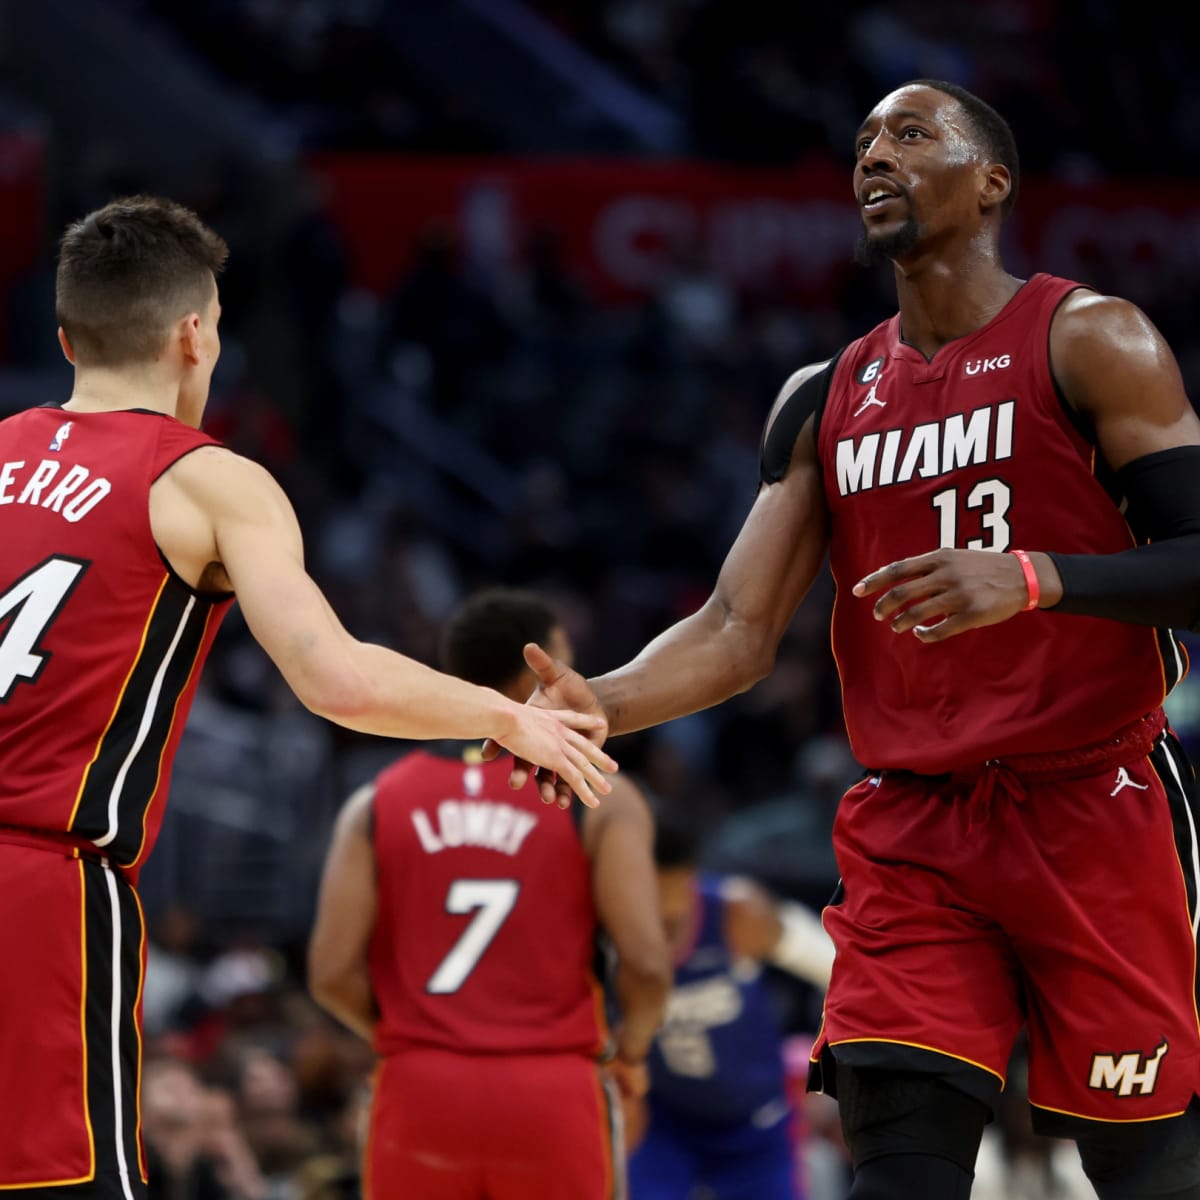 Analysis of Wednesday night's Miami Heat-Los Angeles Lakers